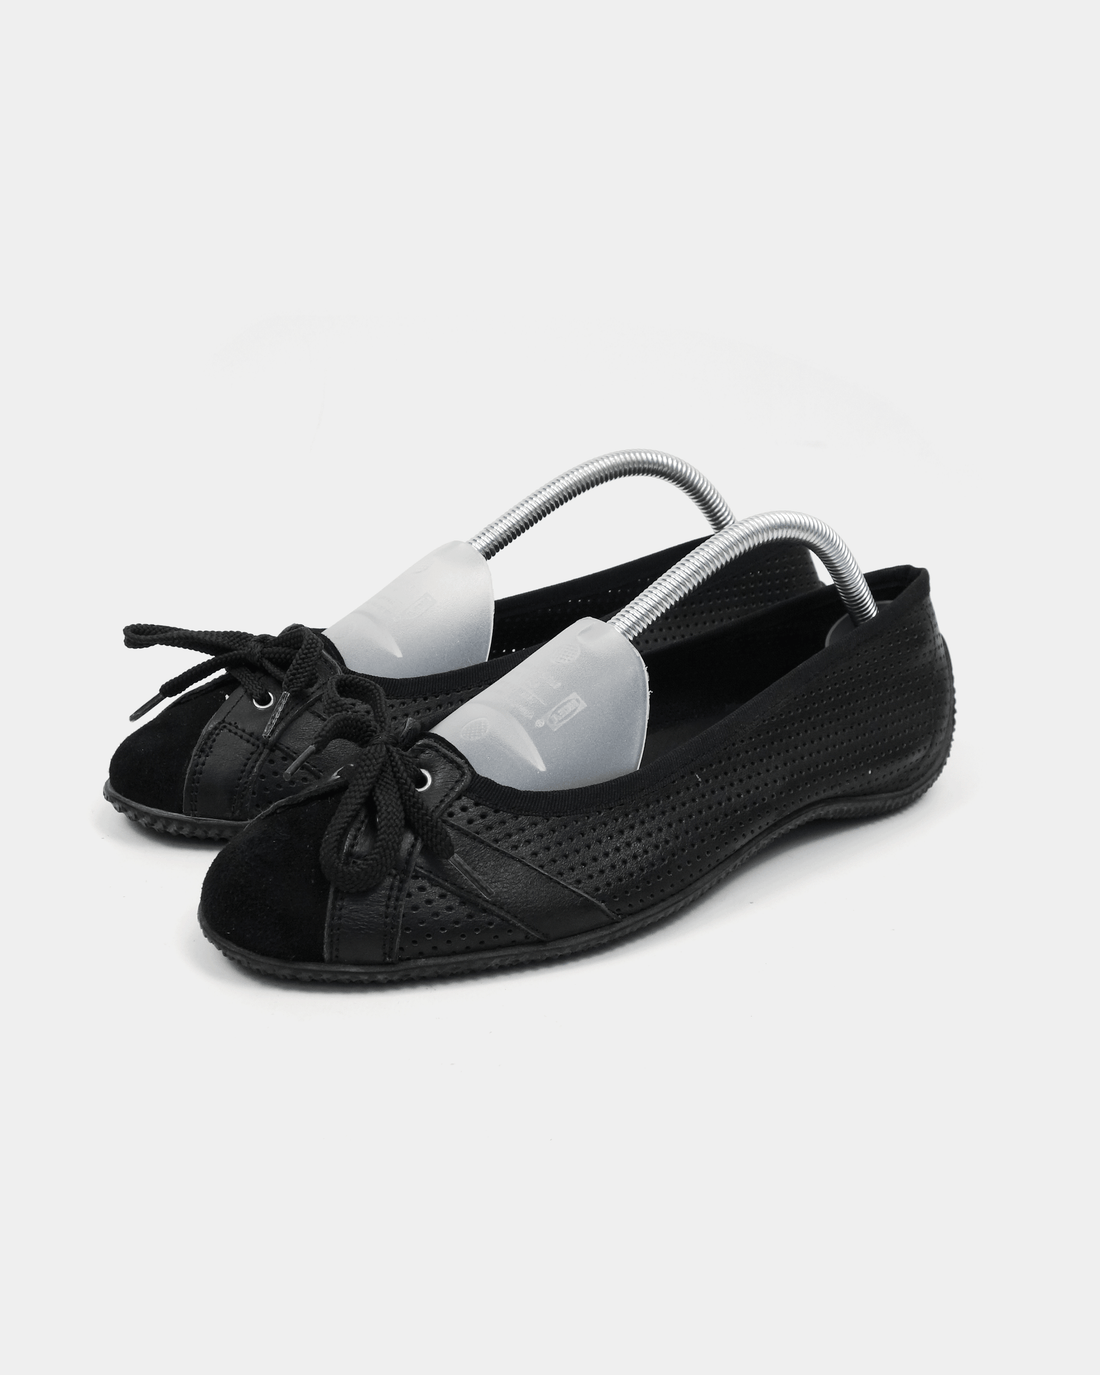 Sonia Rikyel Black Flats Shoes 2000's